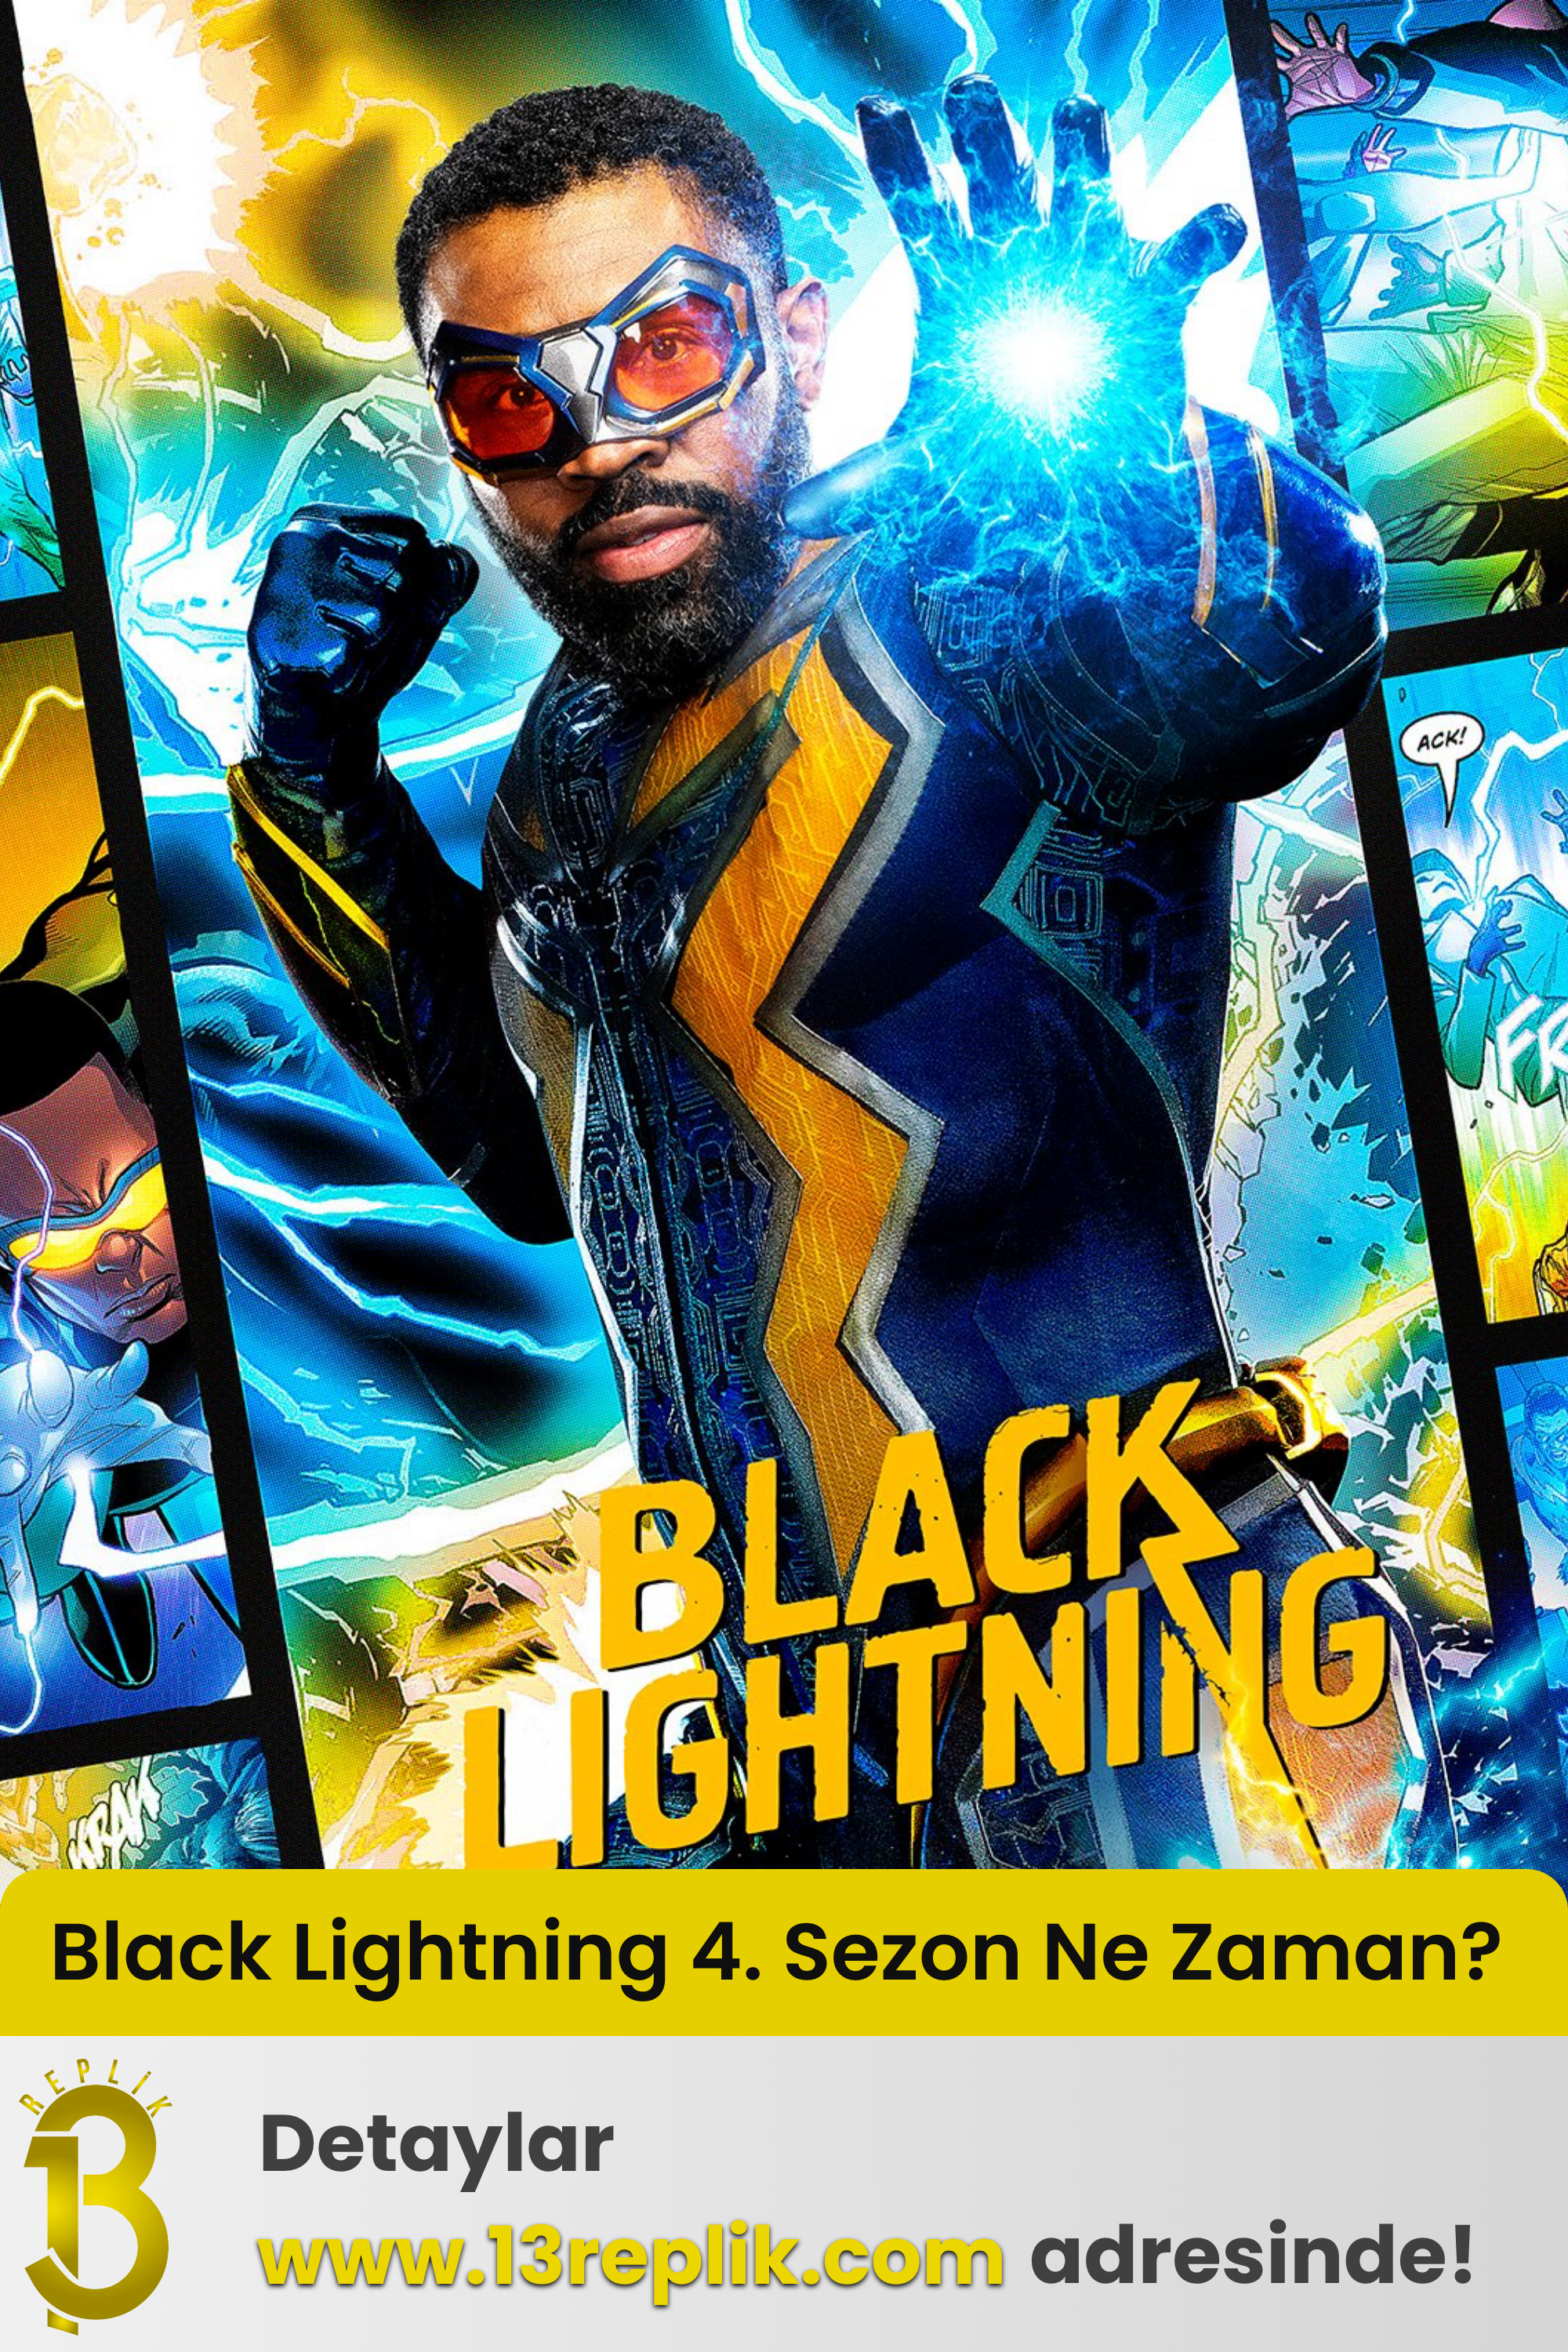 Black Lightning season 4 release date